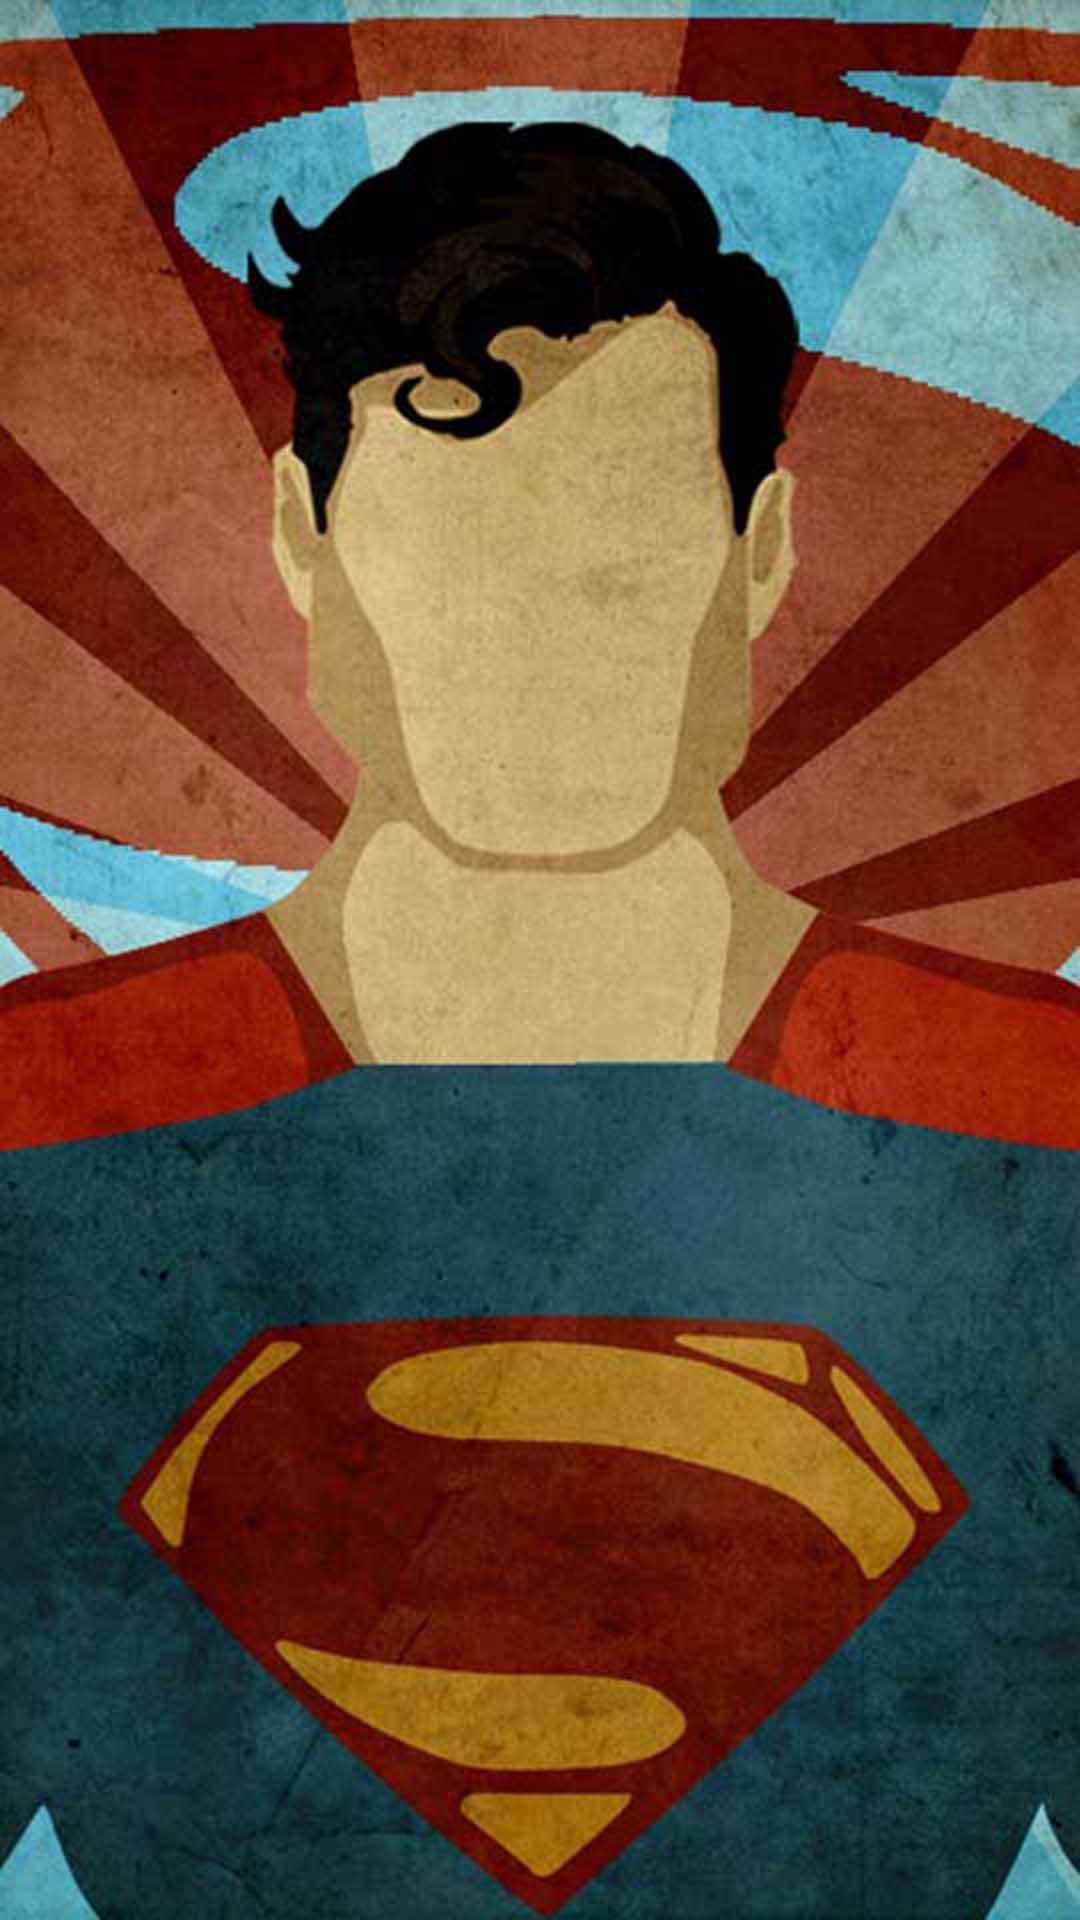 Supermanphonewallpaper by Balsavor on DeviantArt